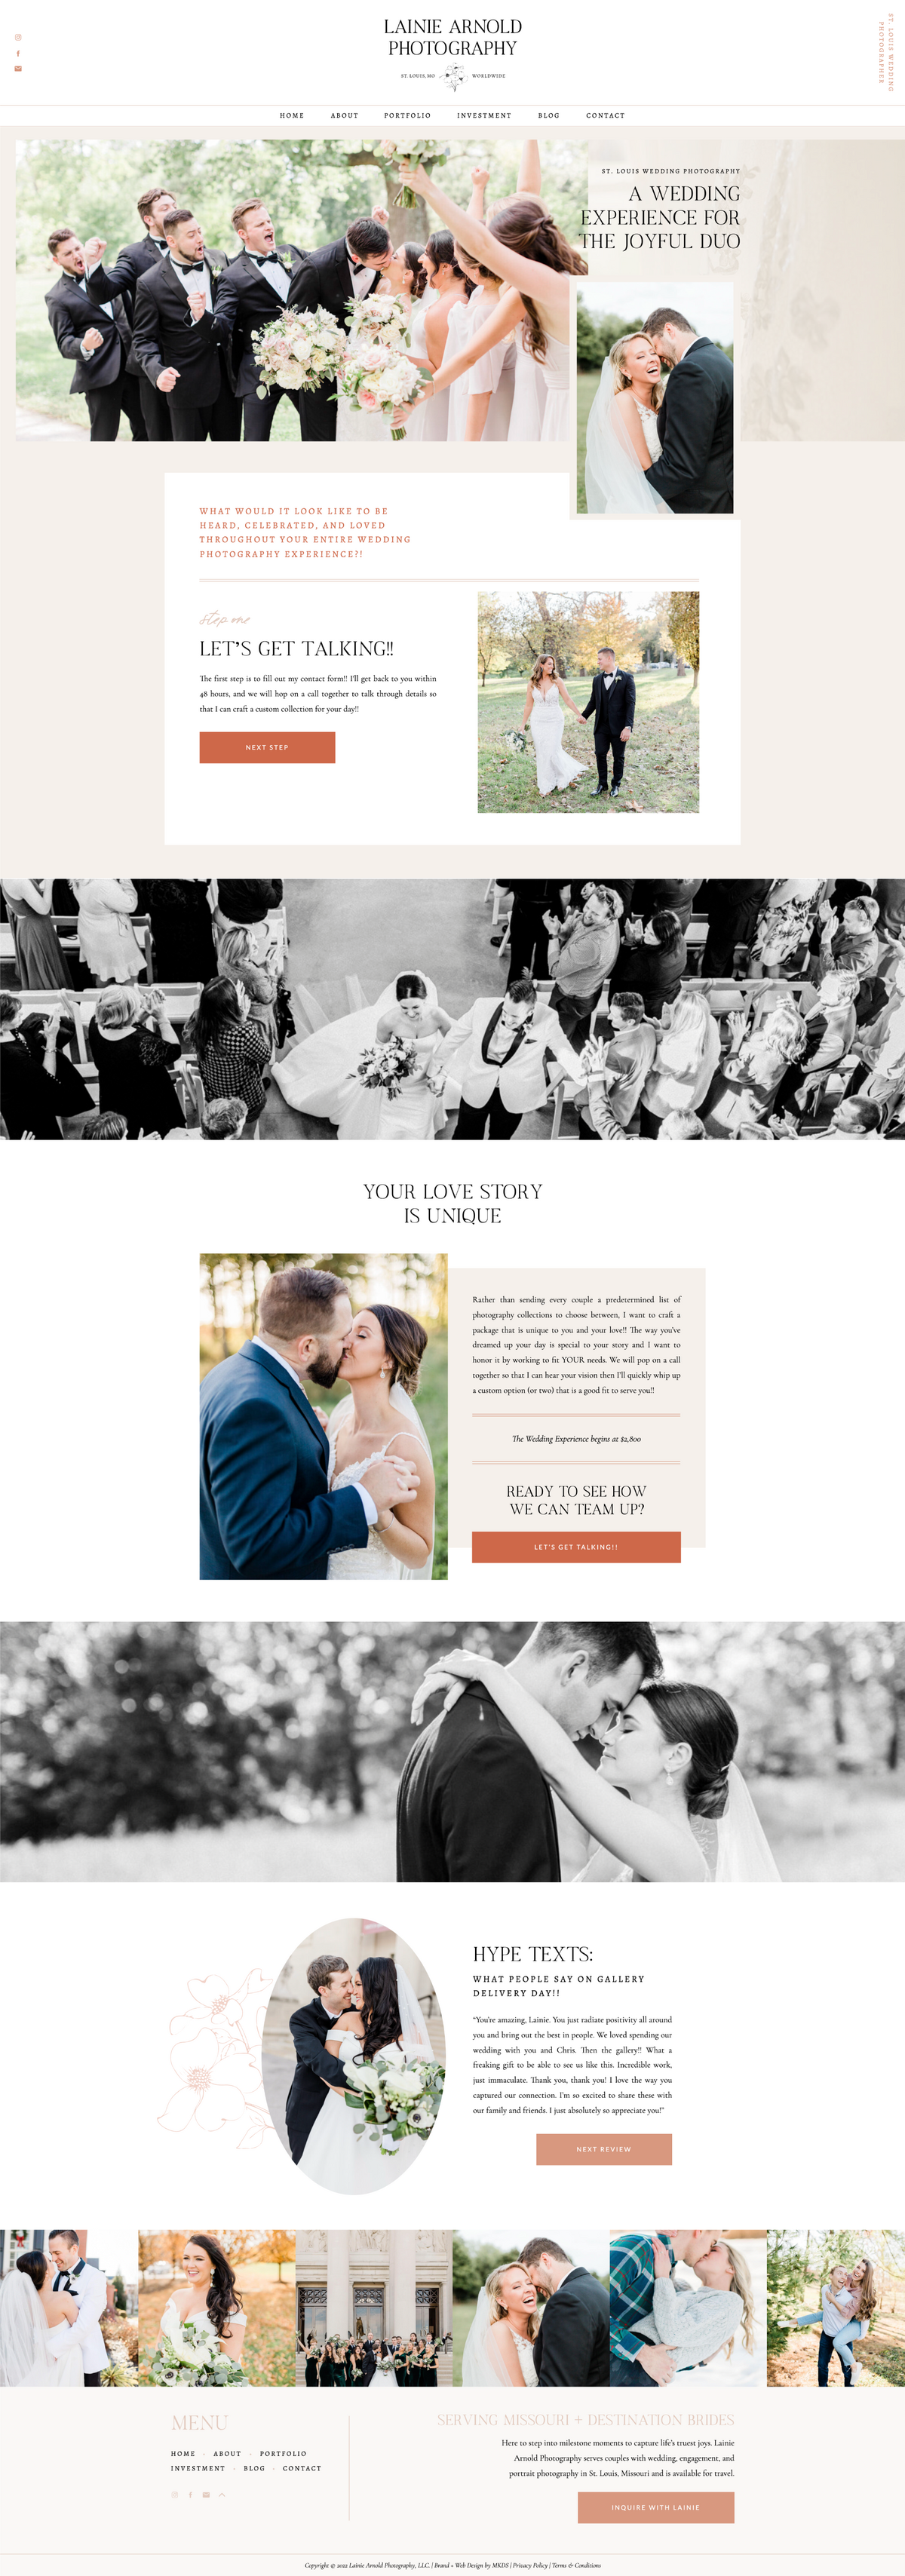 a mockup showing a joyful website design for a wedding photographer